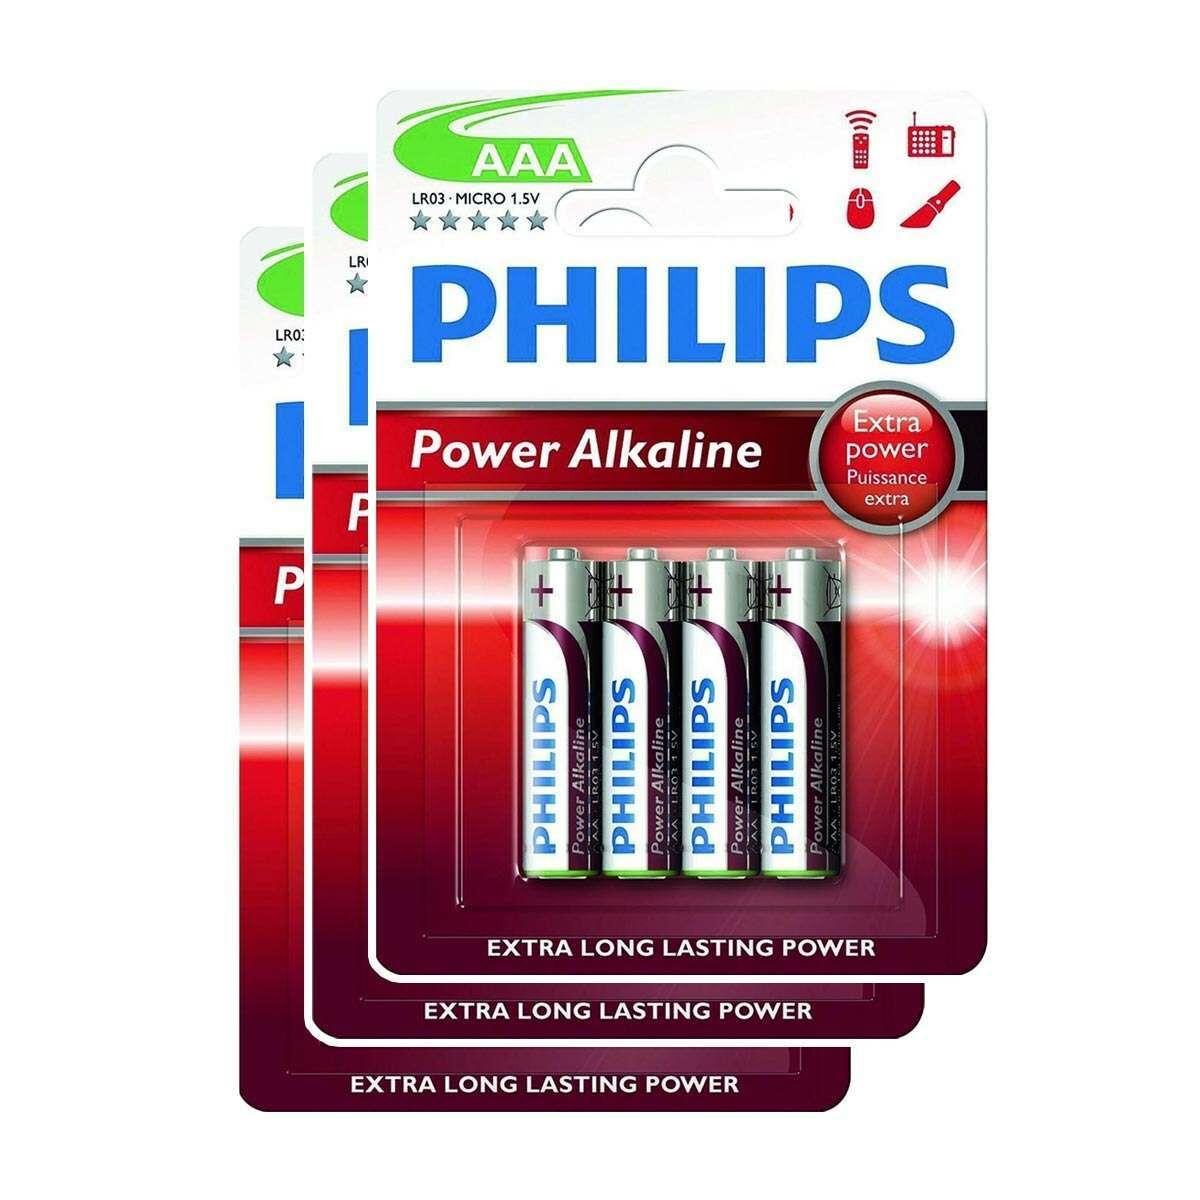 Philips Power Alkaline AAA Batteries (Pack of 12) image 1